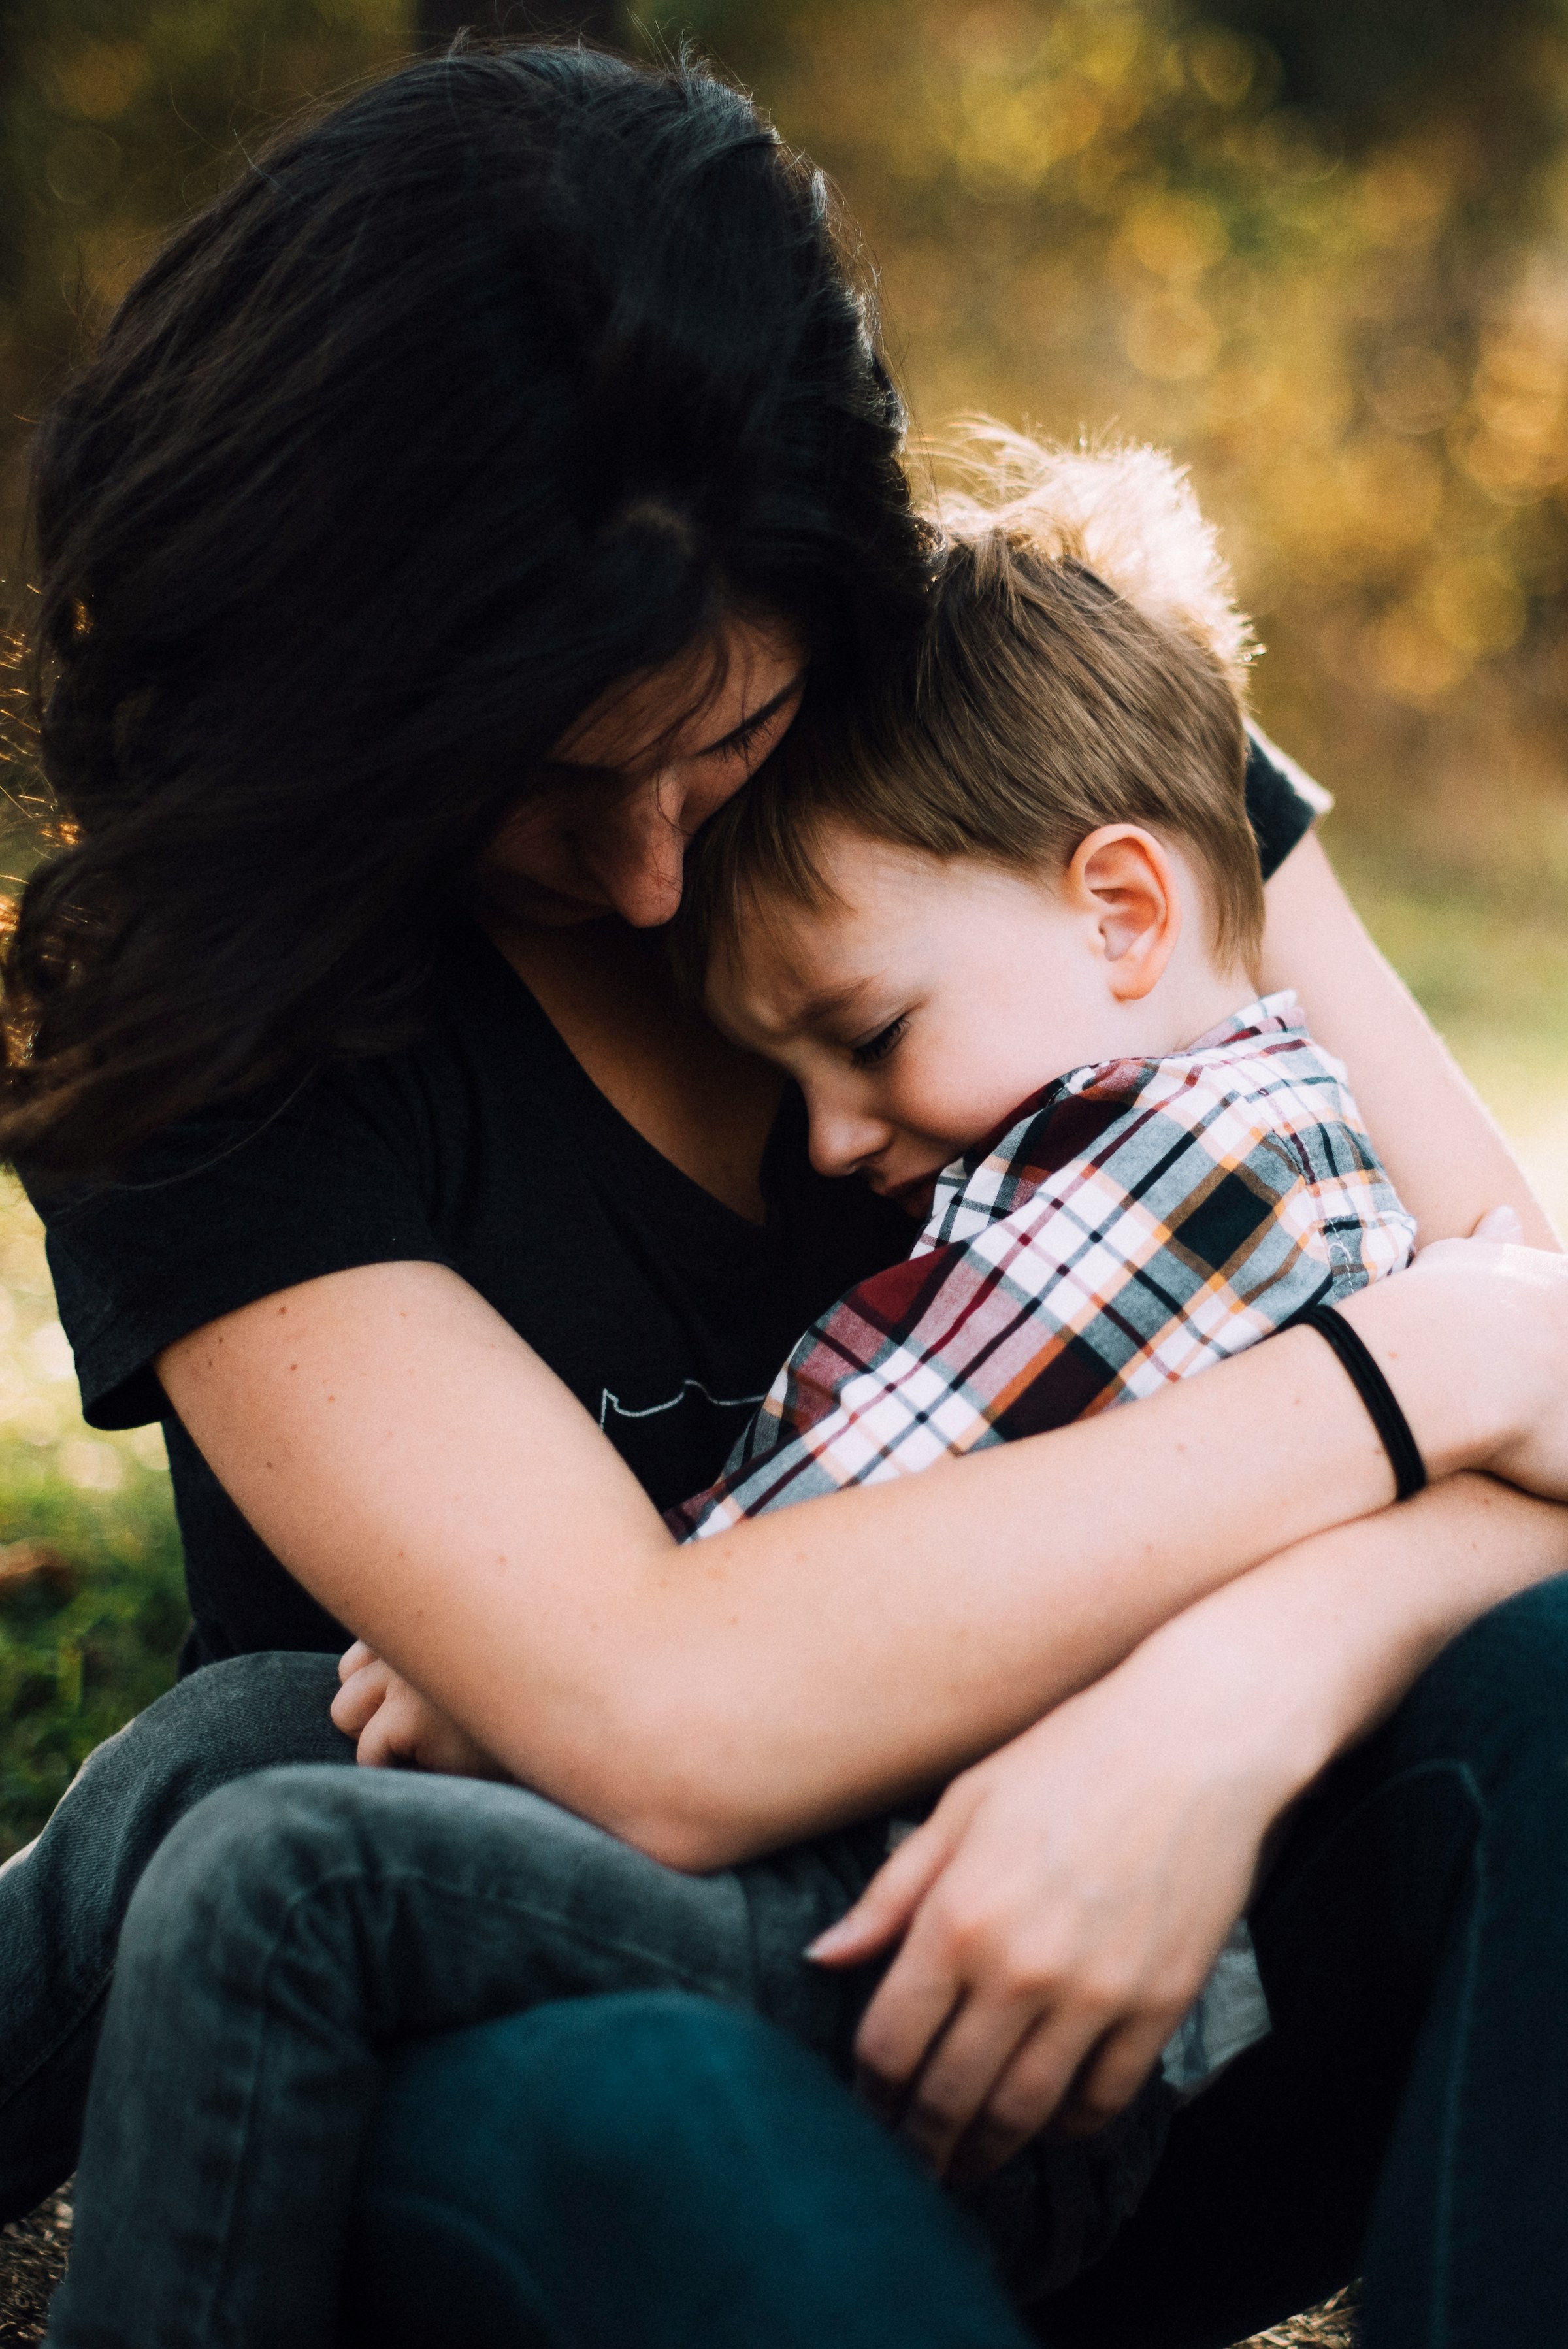 A woman hugging a crying little boy | Source: Unsplash